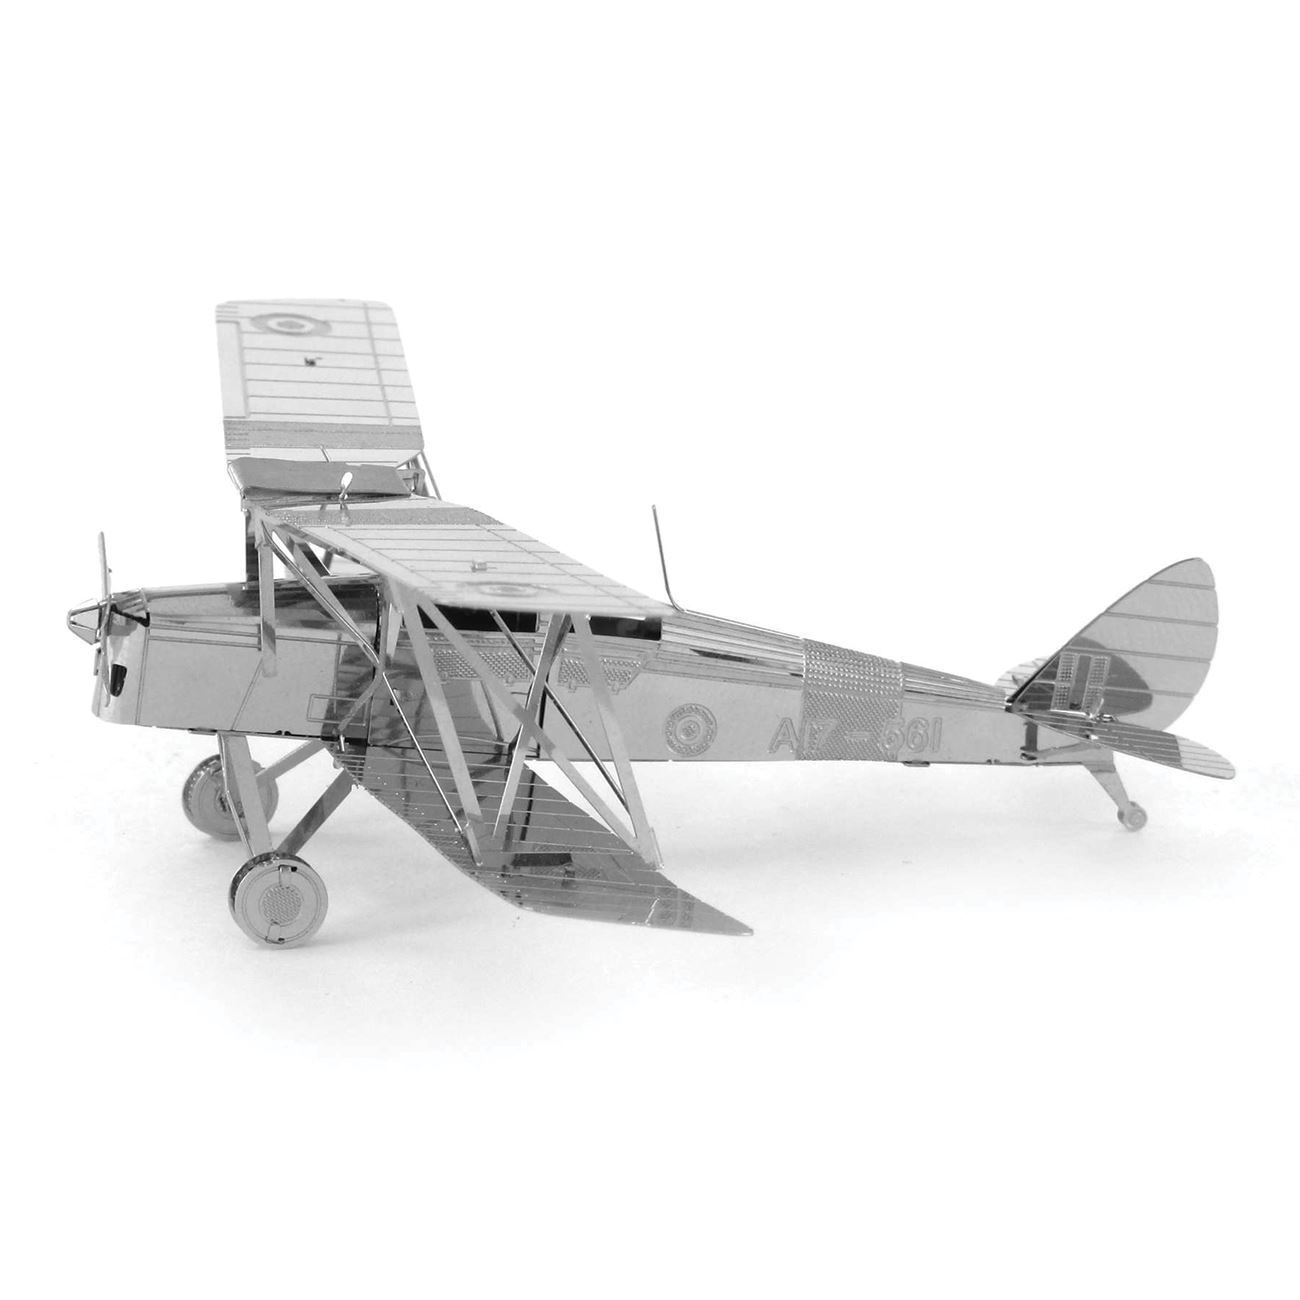 Metal Earth 3D Laser Cut Miniature Model Kit De Havilland Tiger Moth